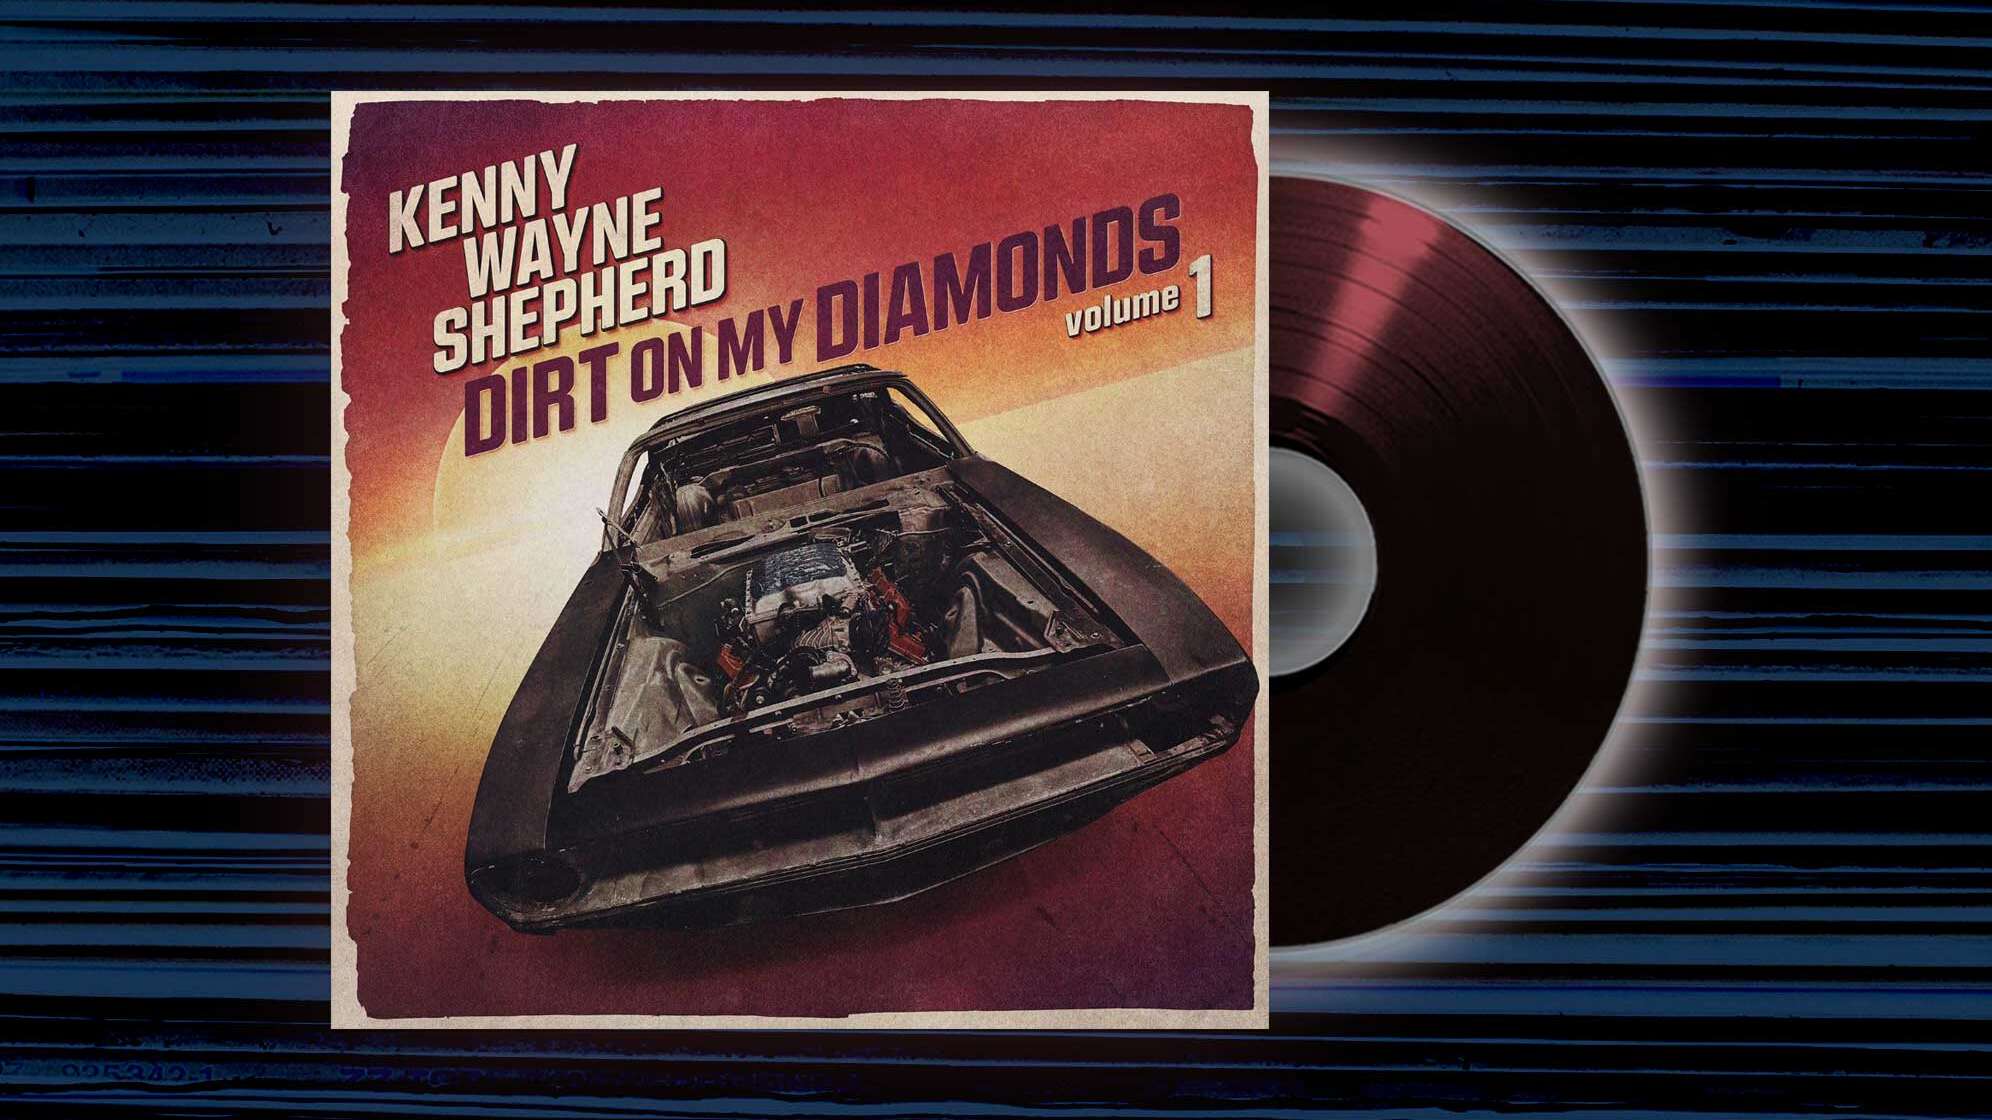 Das Albumcover von Kenny Wayne Shepherd zu Dirt On My Diamonds Vol. 1